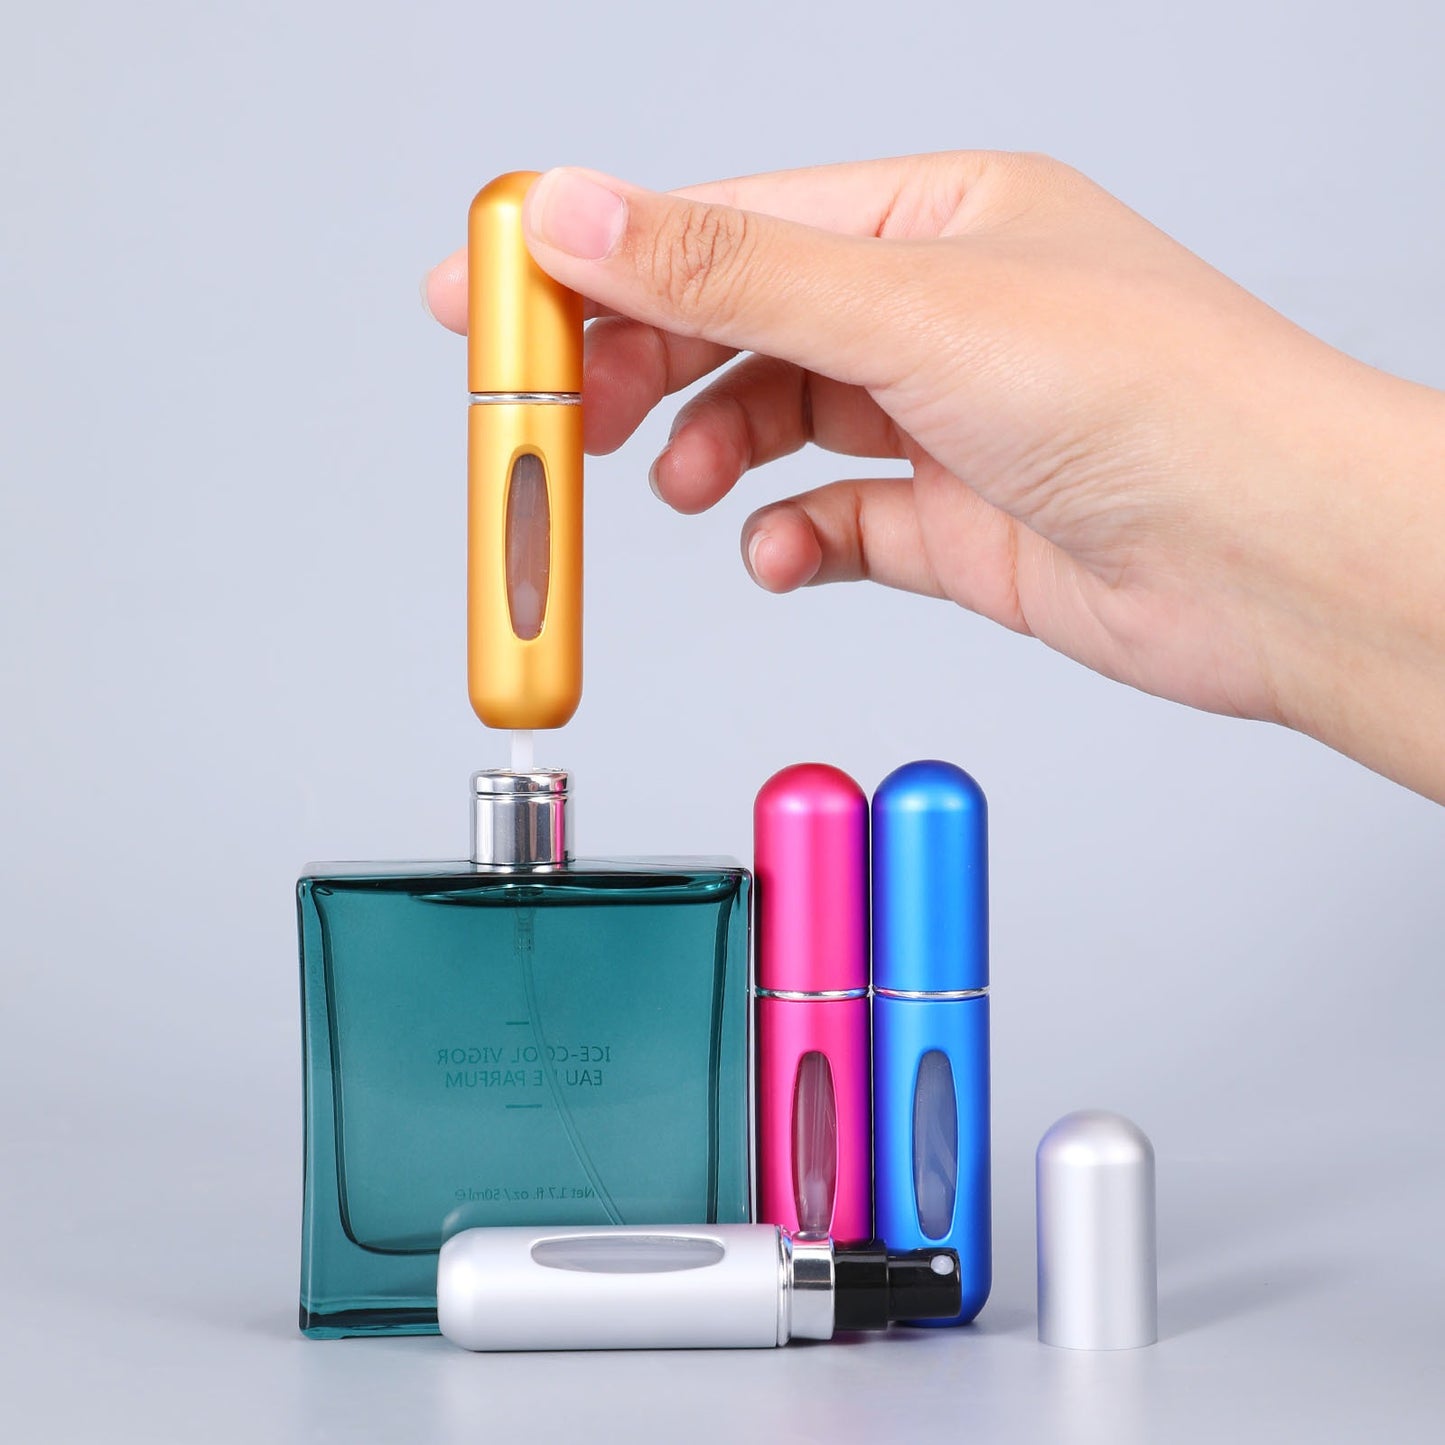 Portable Mini Refillable Perfume Bottle With Spray.